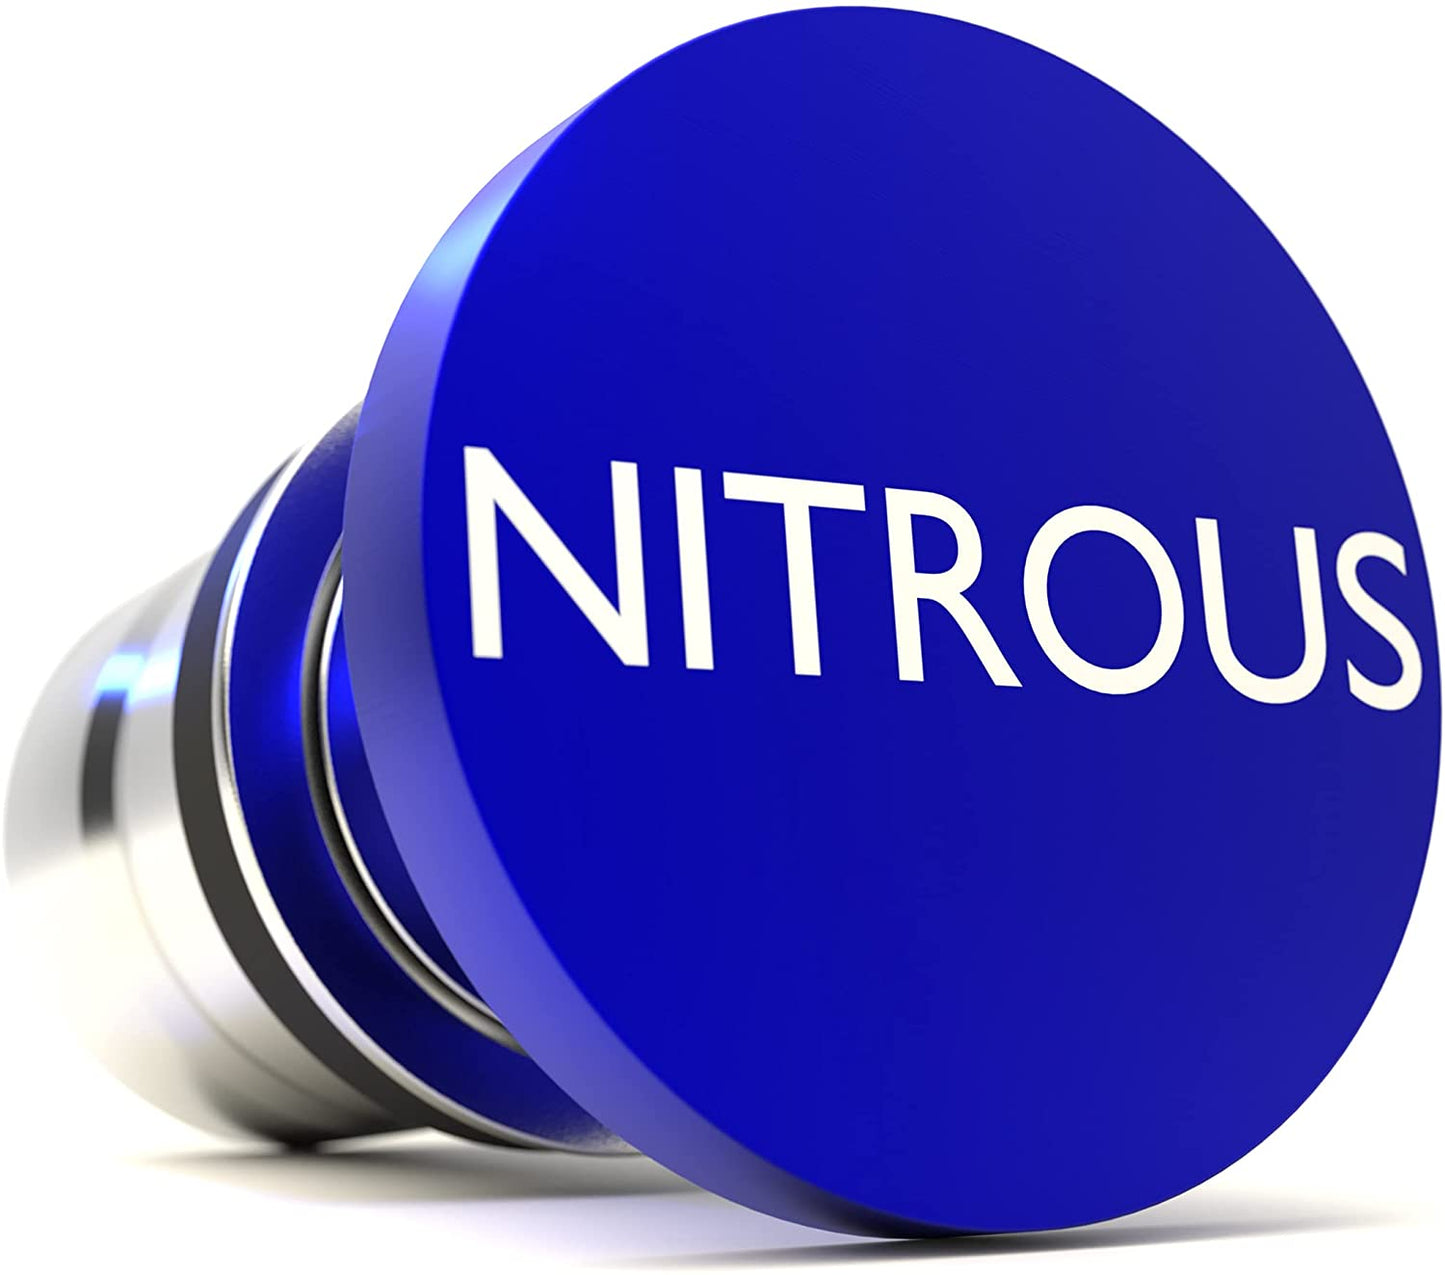 Nitrous Button Car Cigarette Lighter by Citadel Black - Anodized Aluminum, 12-Volt Replacement Accessory, Fits Most Vehicles, Socket Size A - (For 8 piece(s))